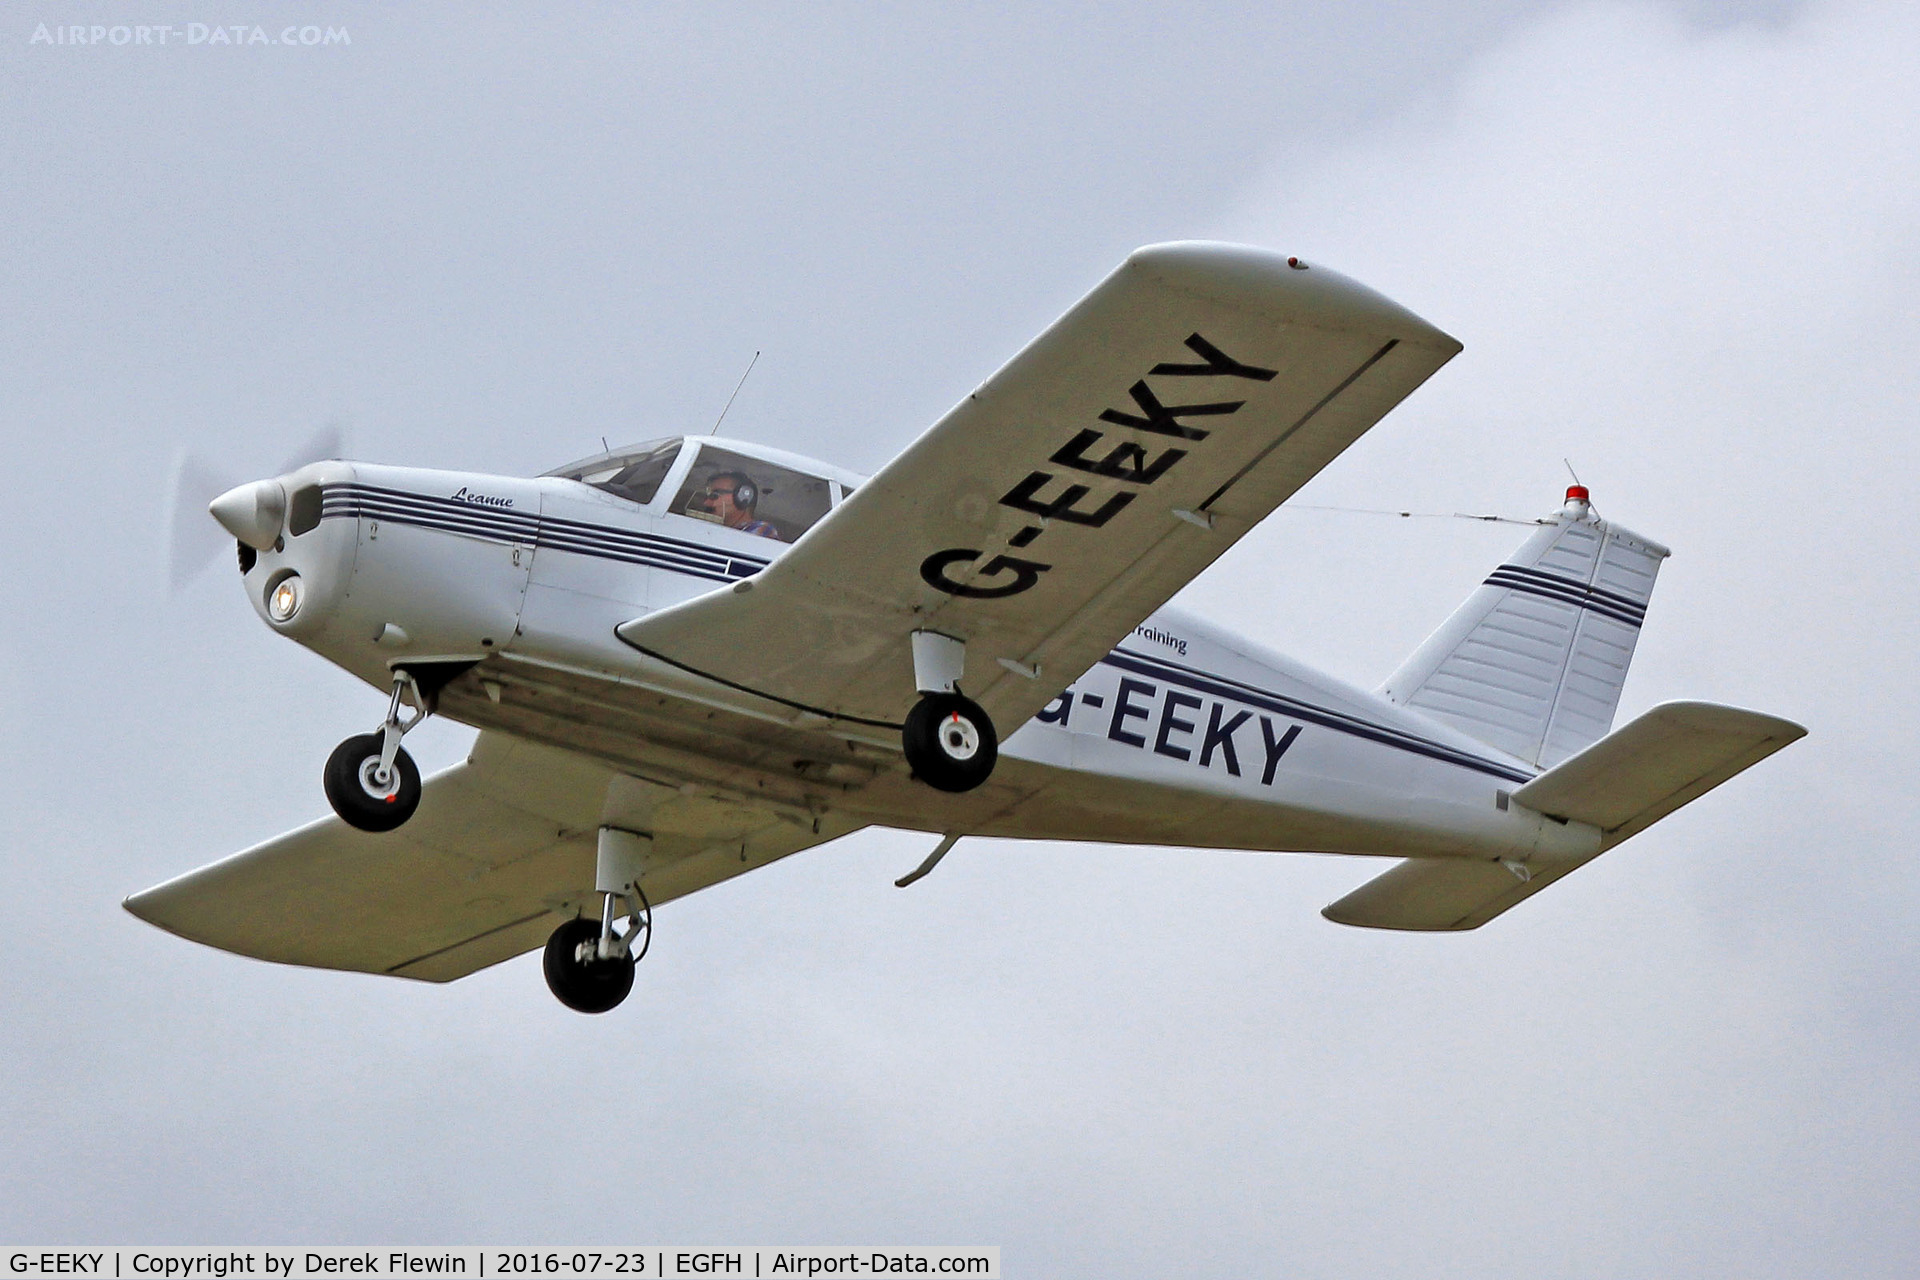 G-EEKY, 1969 Piper PA-28-140 Cherokee C/N 28-25422, Cherokee, Horizon Flight Training St Athan based, previously N8128N, LN-BNX, OY-DFP, seen departing runway 22.